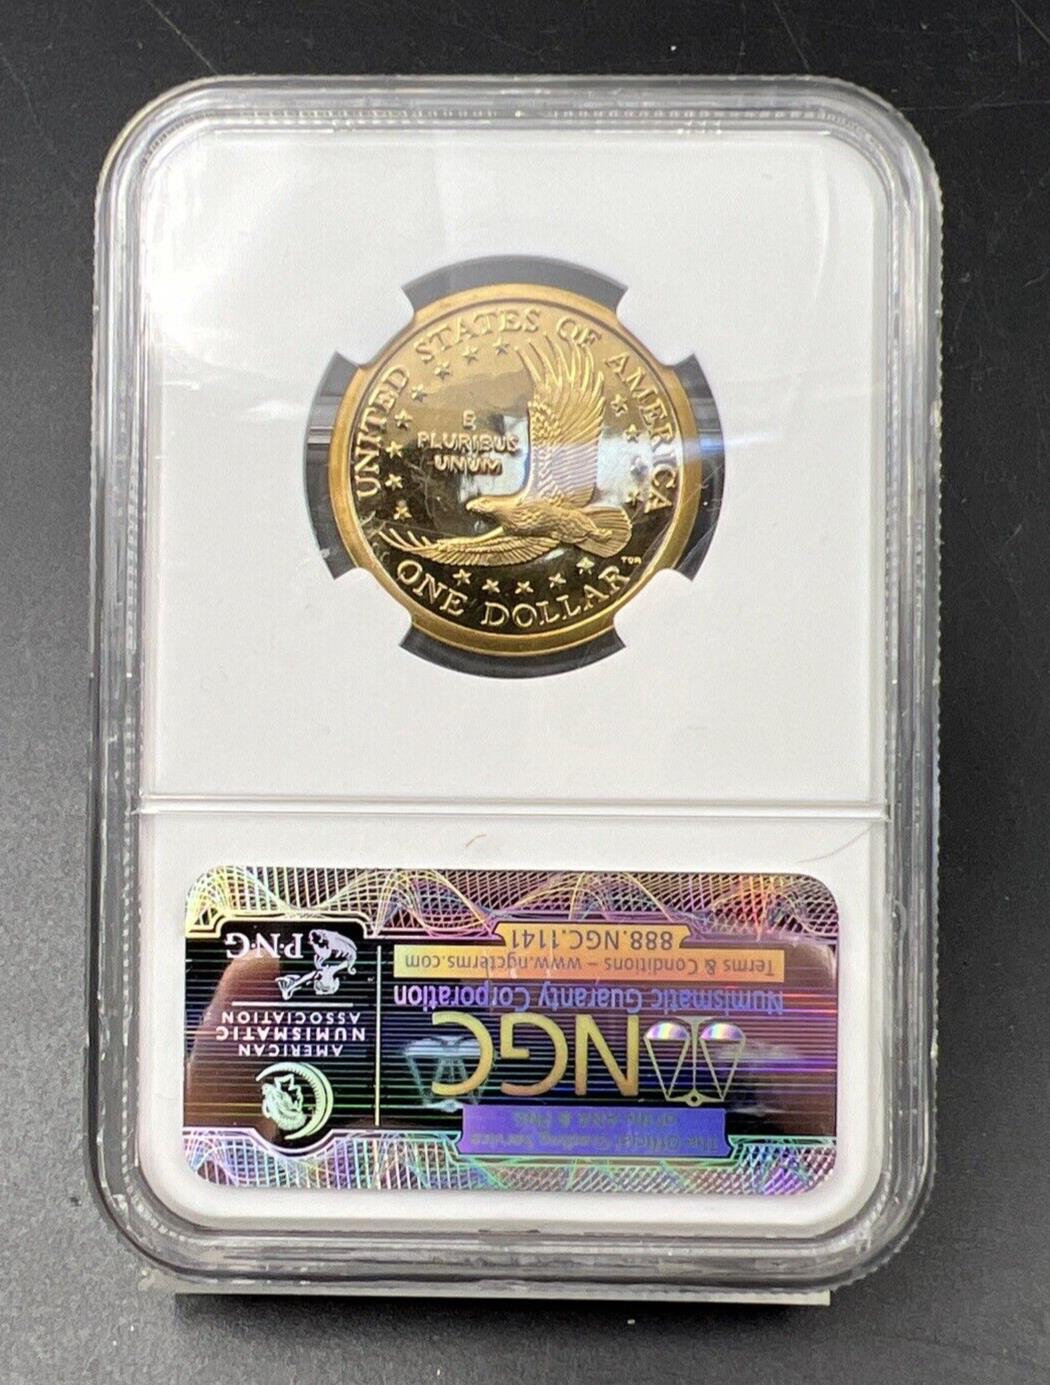 2001 S $1 Sacagawea Native Dollar Coin PF69 UCAM NGC Certified #018